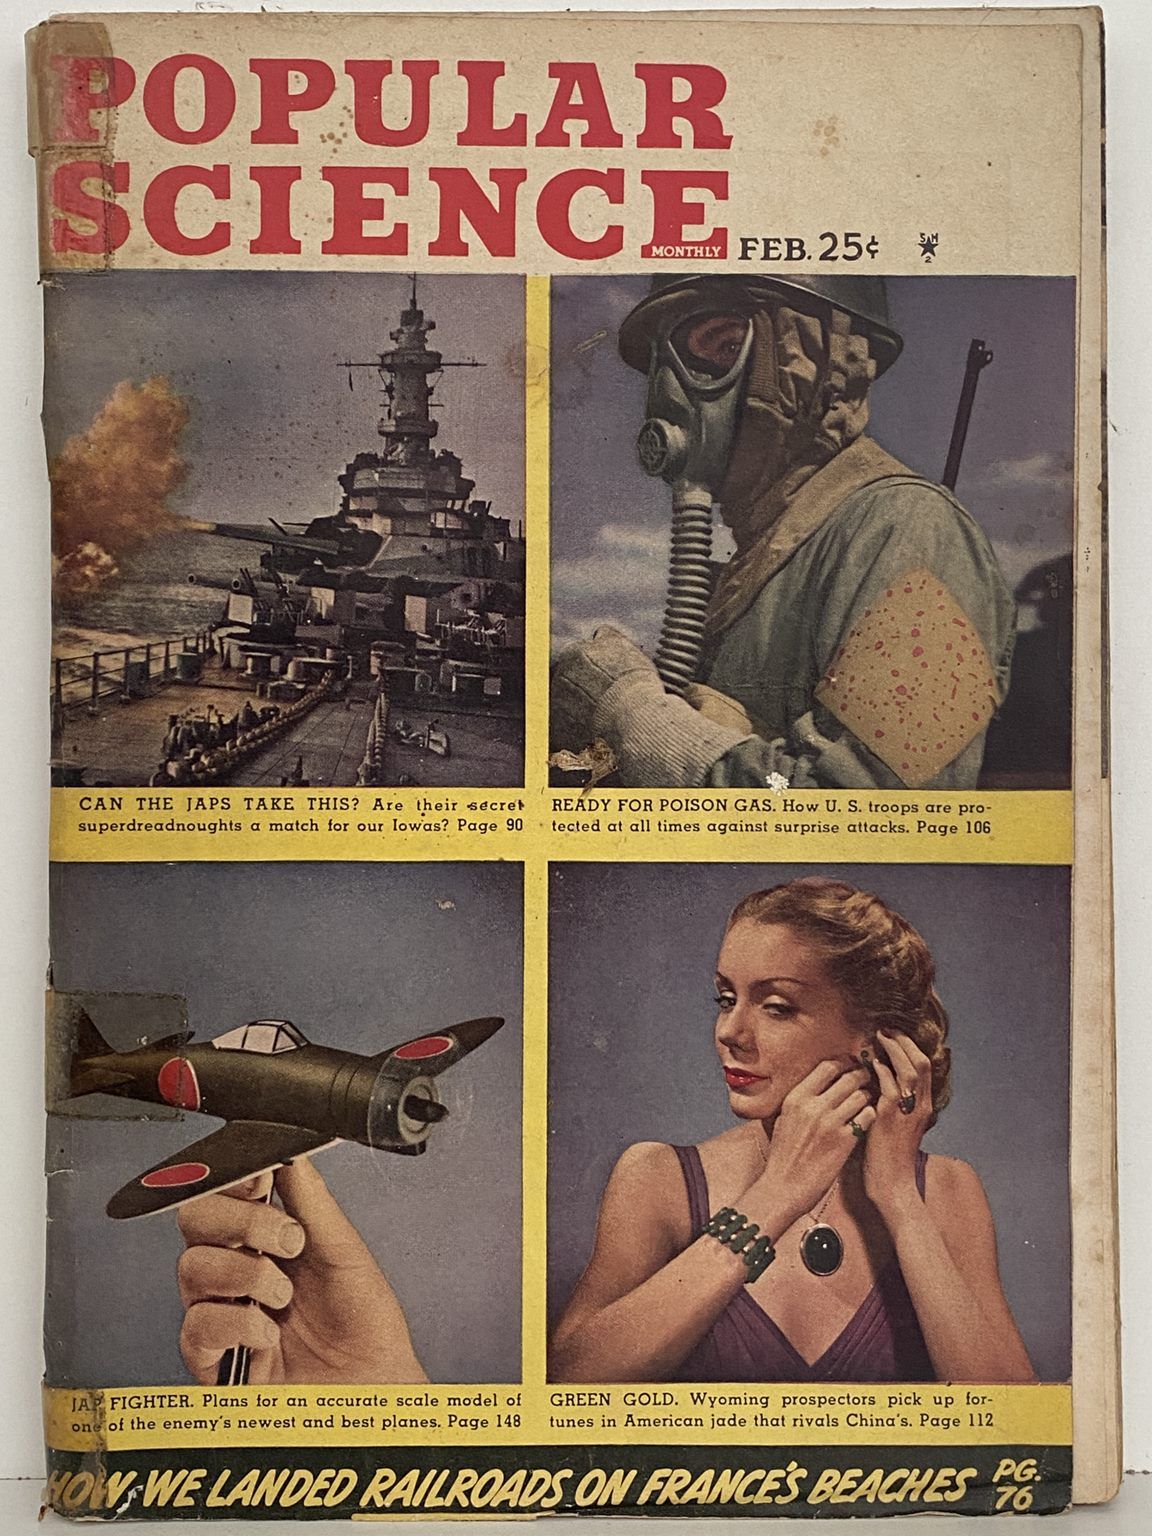 VINTAGE MAGAZINE: Popular Science, Vol. 146, No. 2 - February 1945